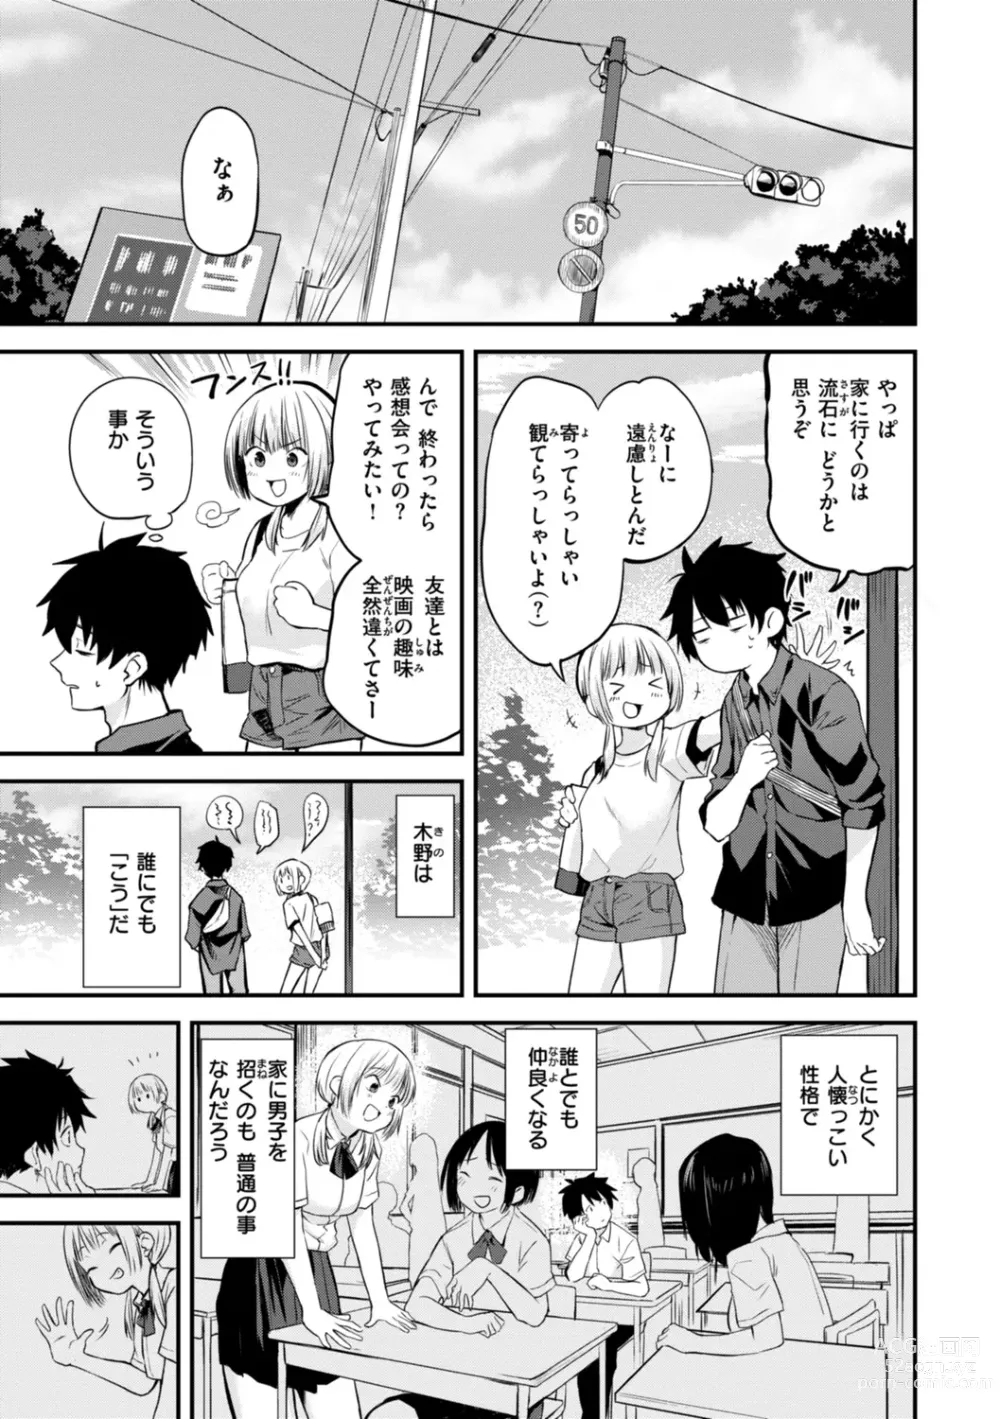 Page 5 of manga Jaa, Ecchi Shichau? - Shall we have H then?